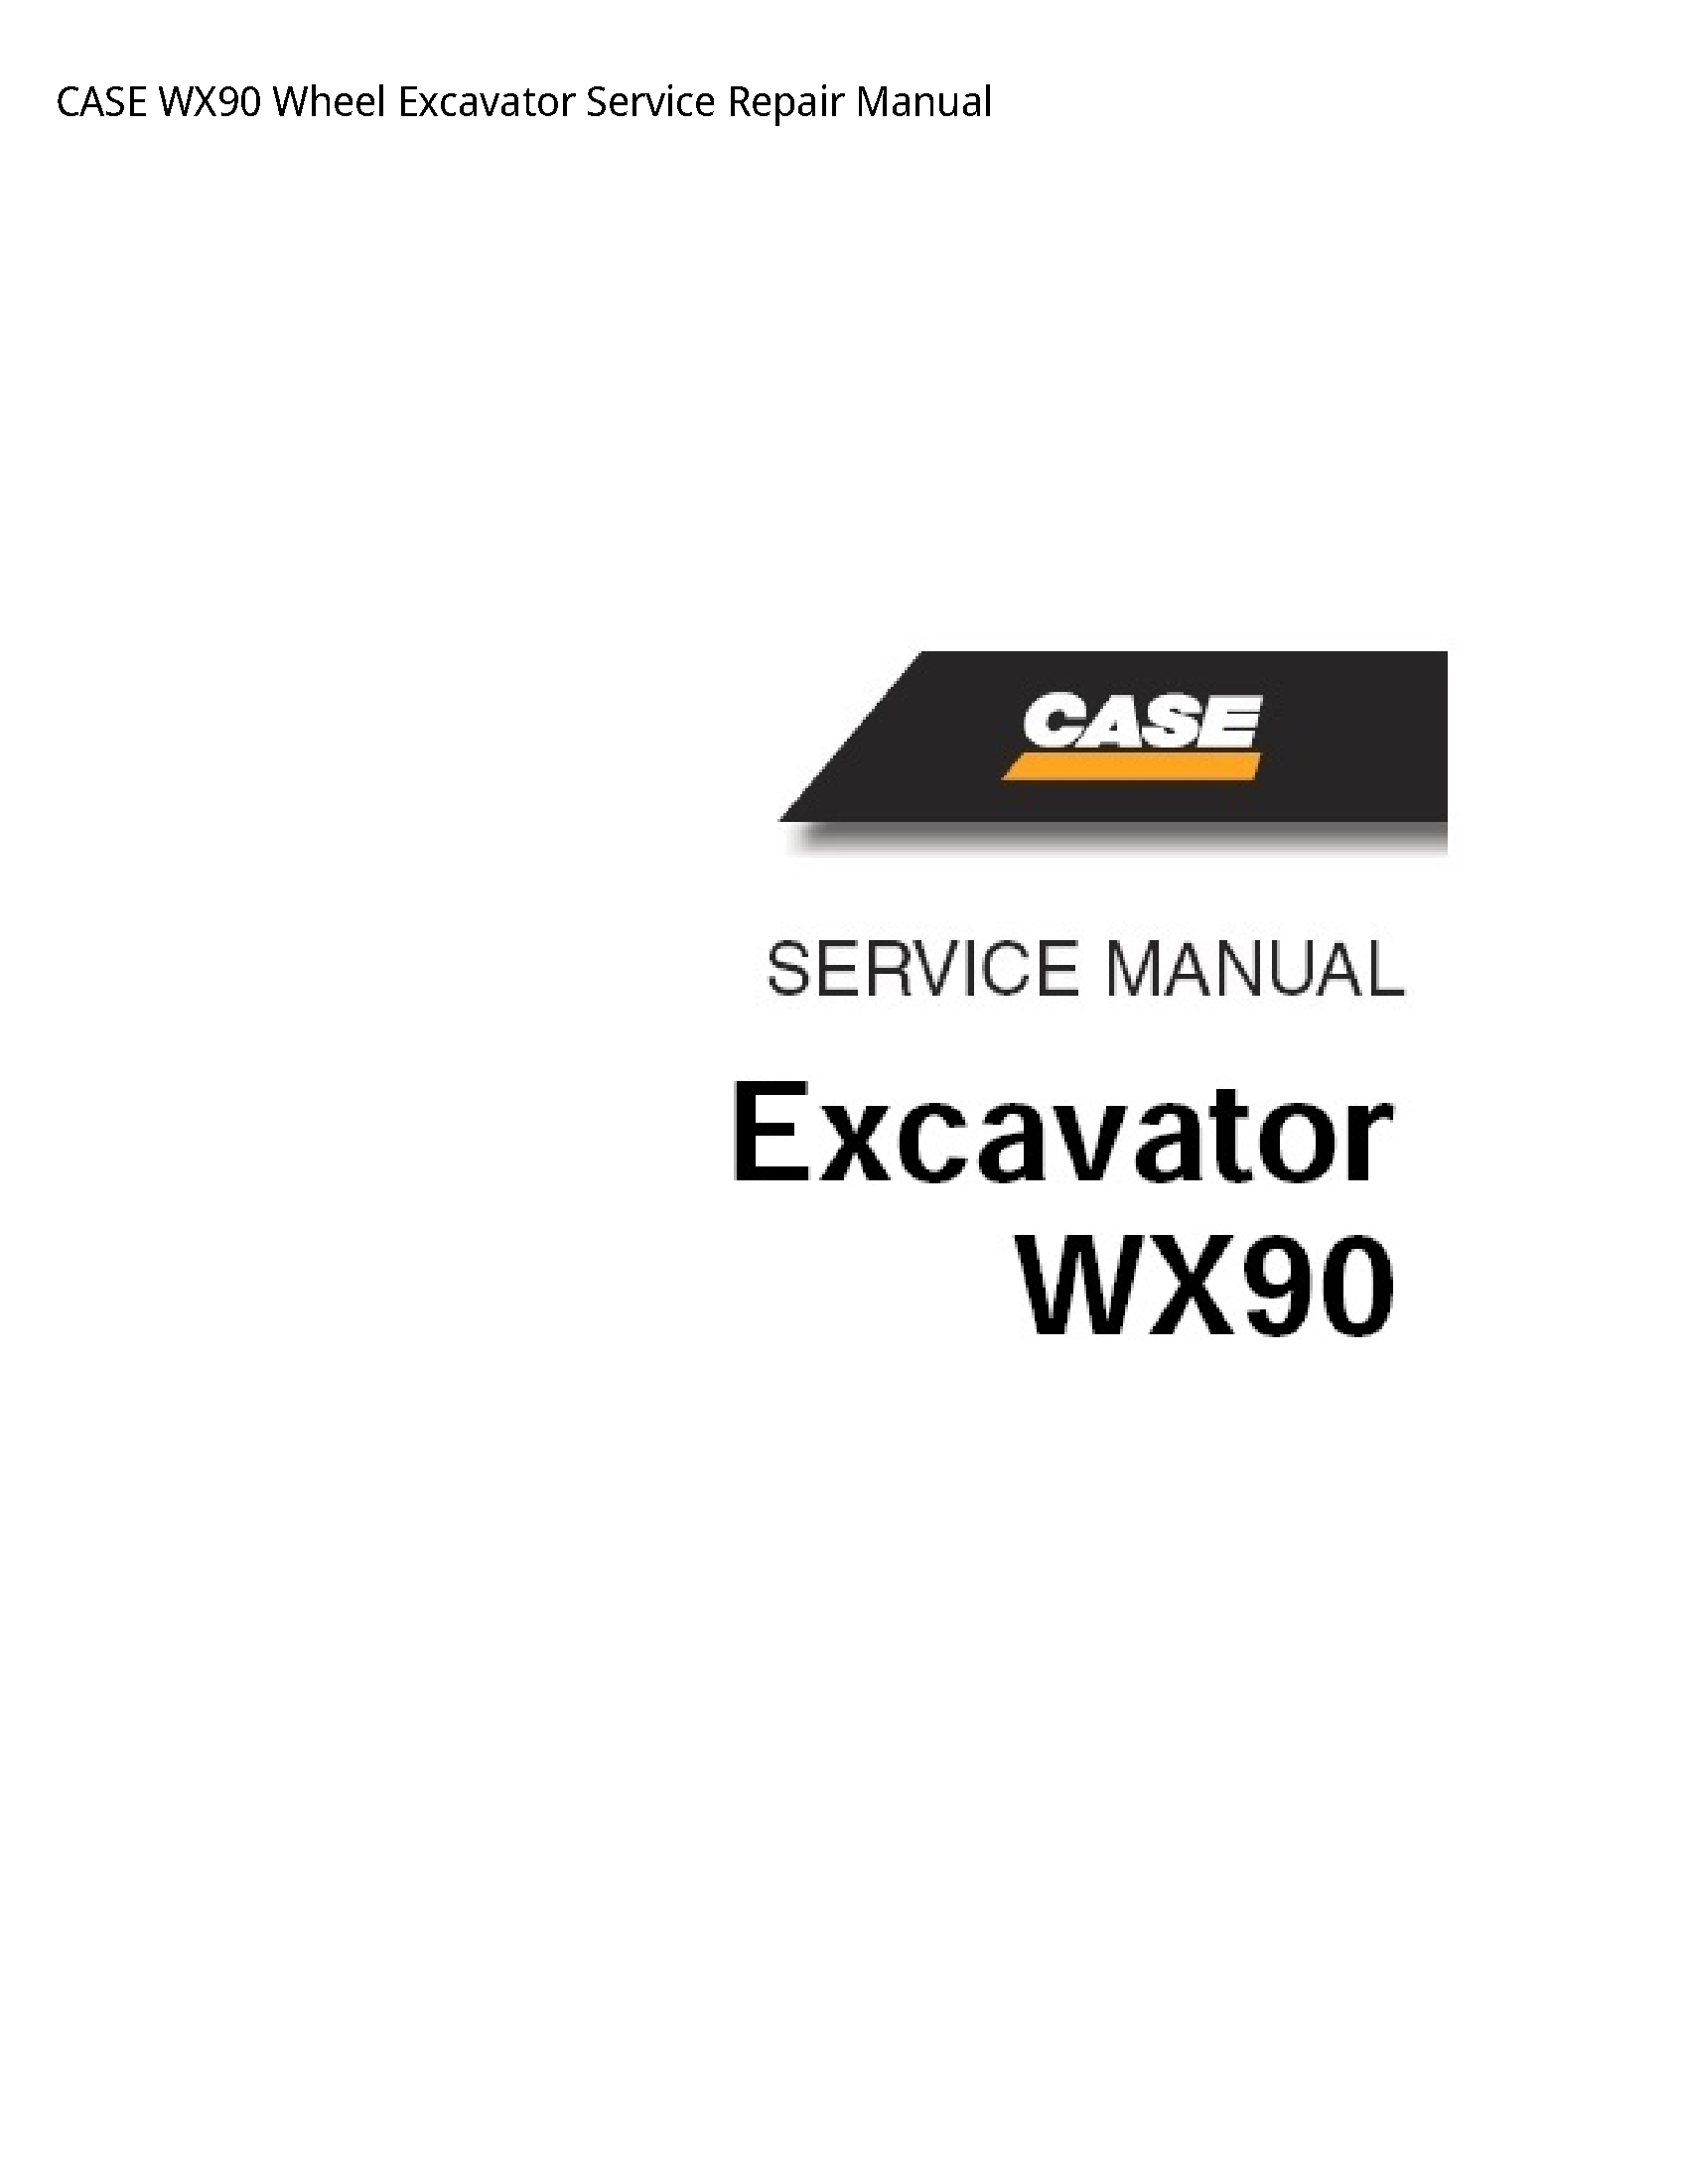 Case/Case IH WX90 Wheel Excavator manual